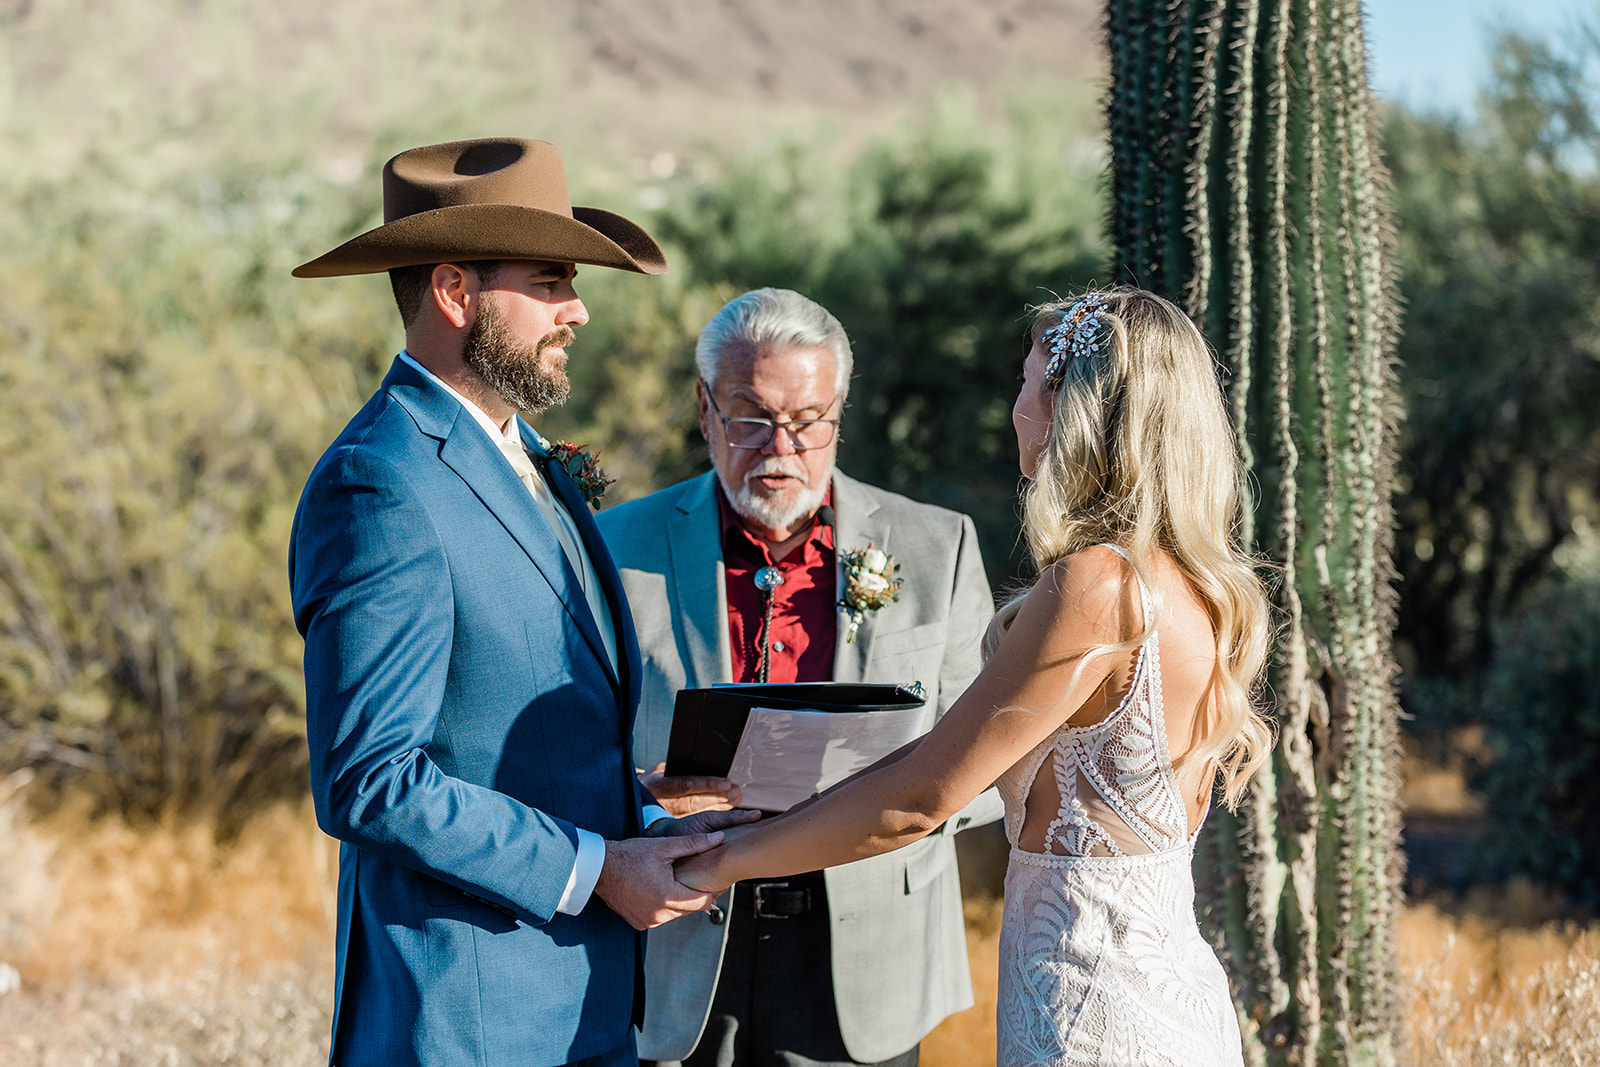 Wedding at Lost Dutchman, Arizona